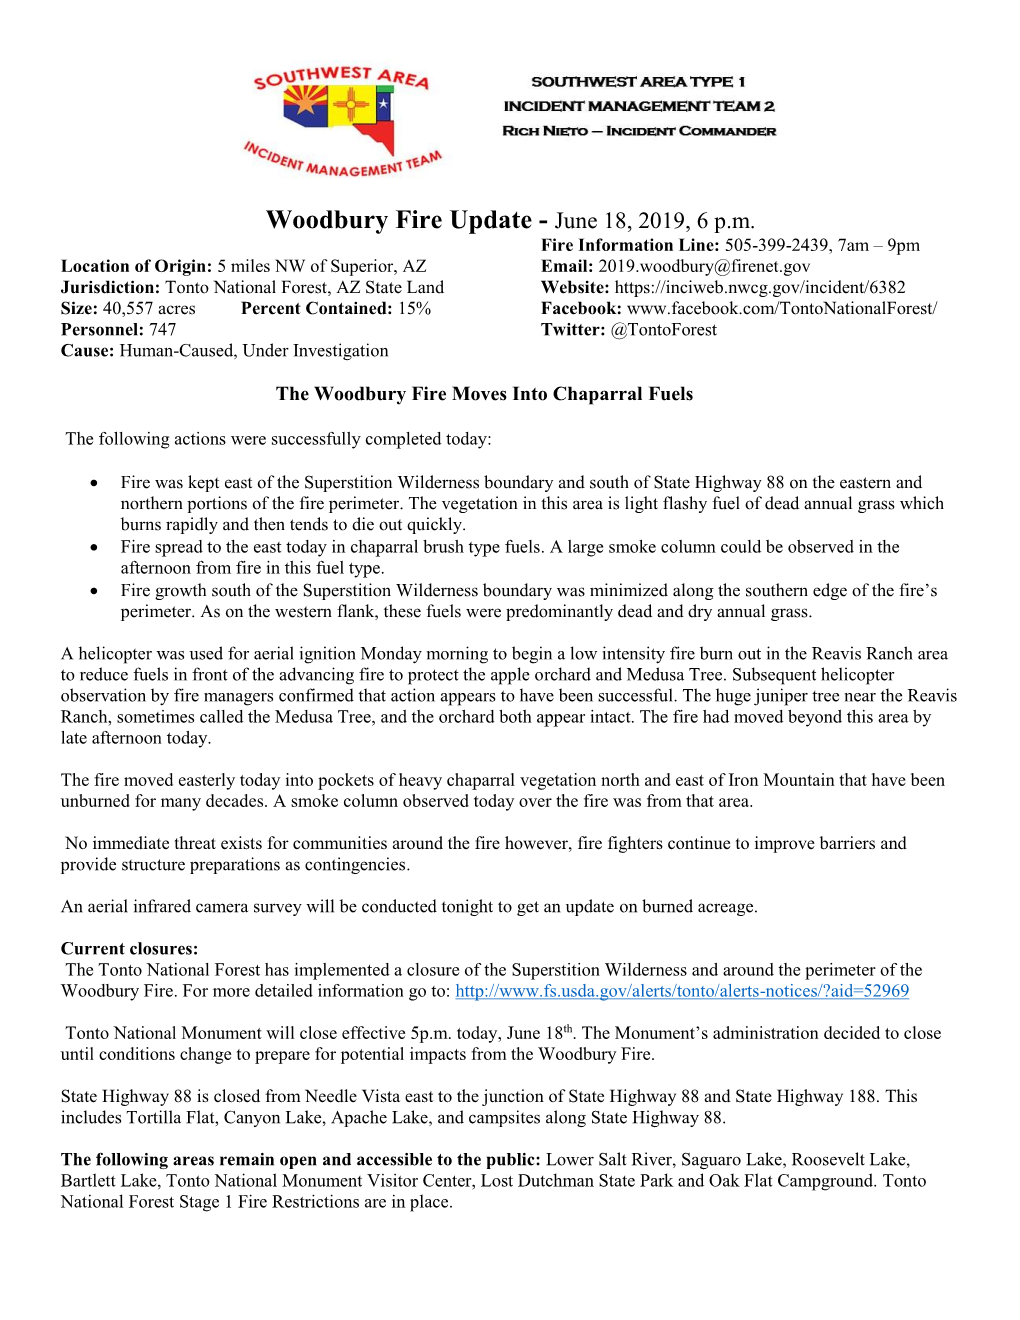 Woodbury Fire Update - June 18, 2019, 6 P.M